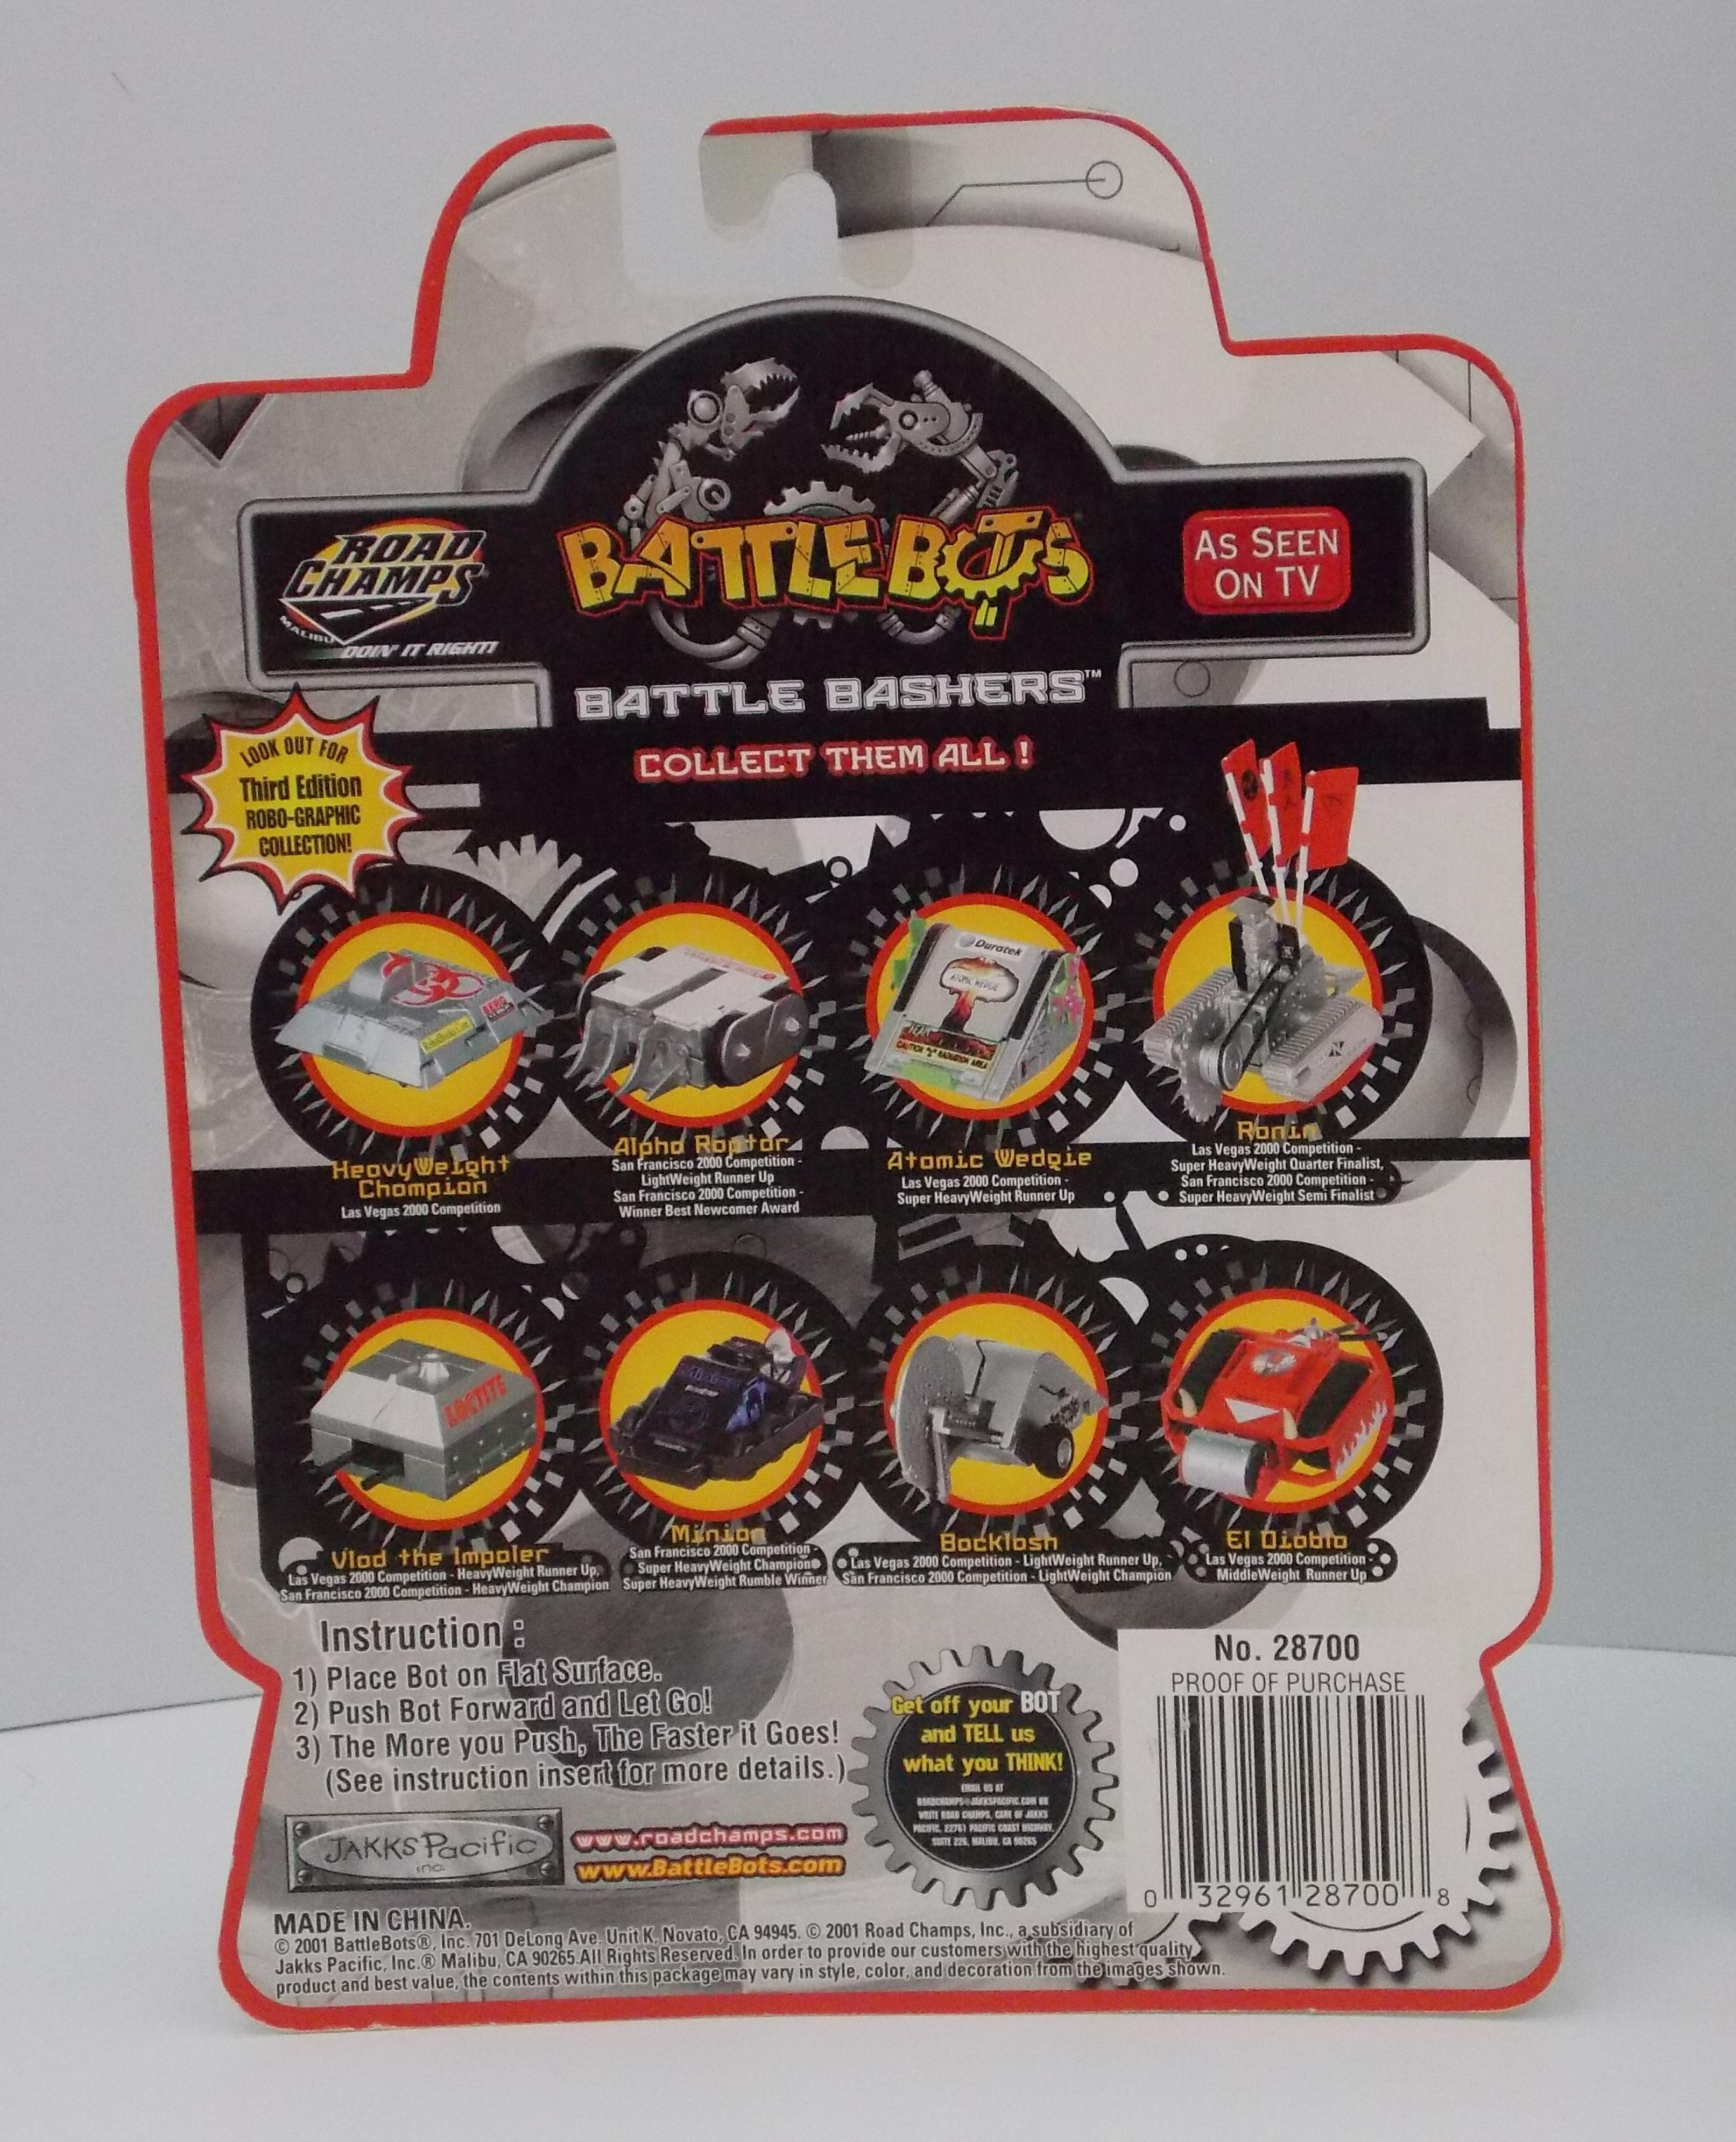 Battlebots Battle Damaged Minion Second Edition Battle Bashers Action Figure